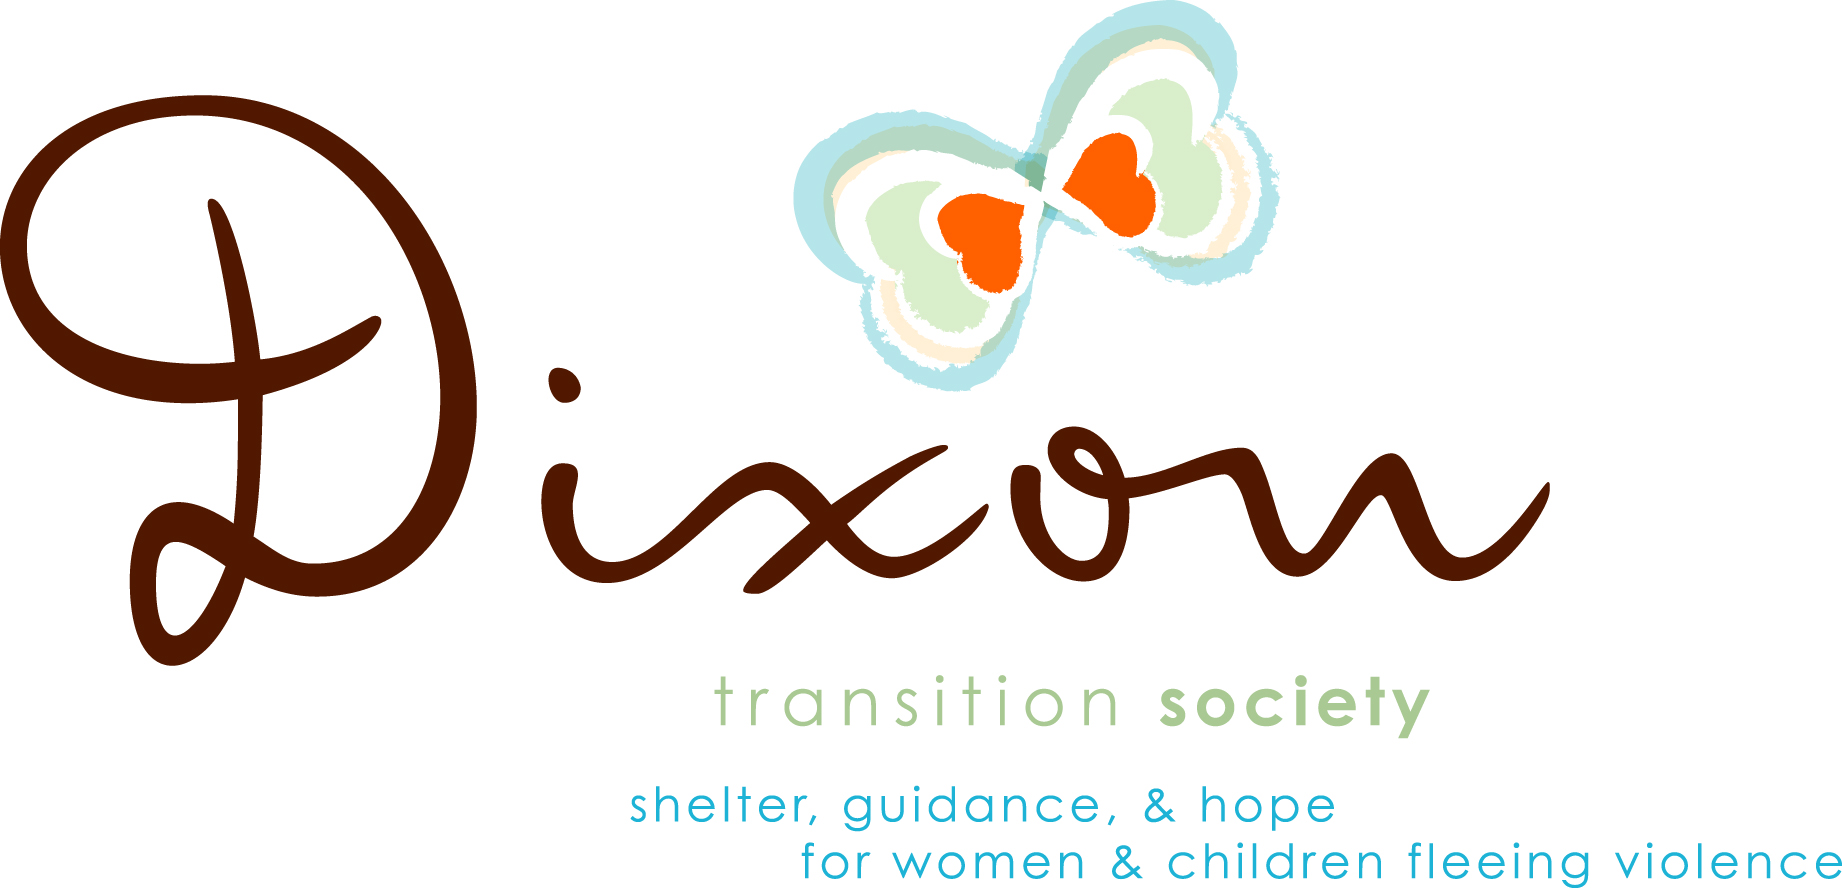 The Dixon Transition Society